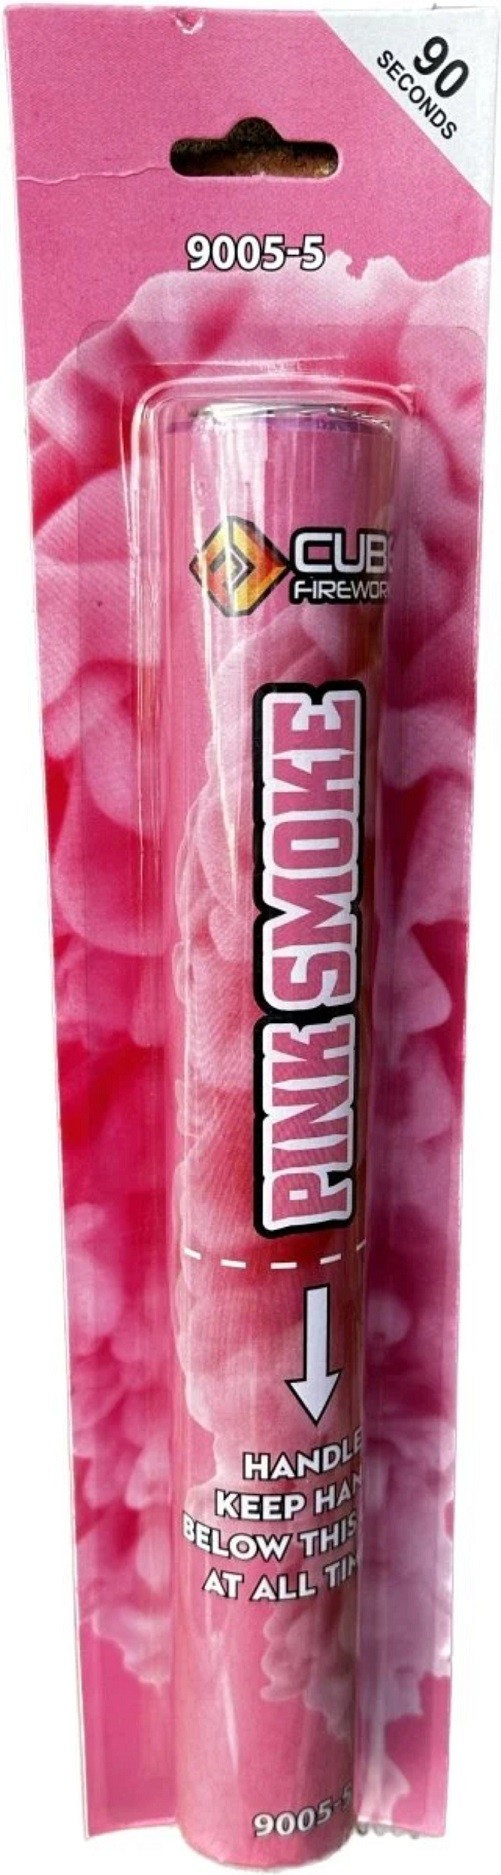 Pink Handheld Smoke Grenade Cube Fireworks Kingdom